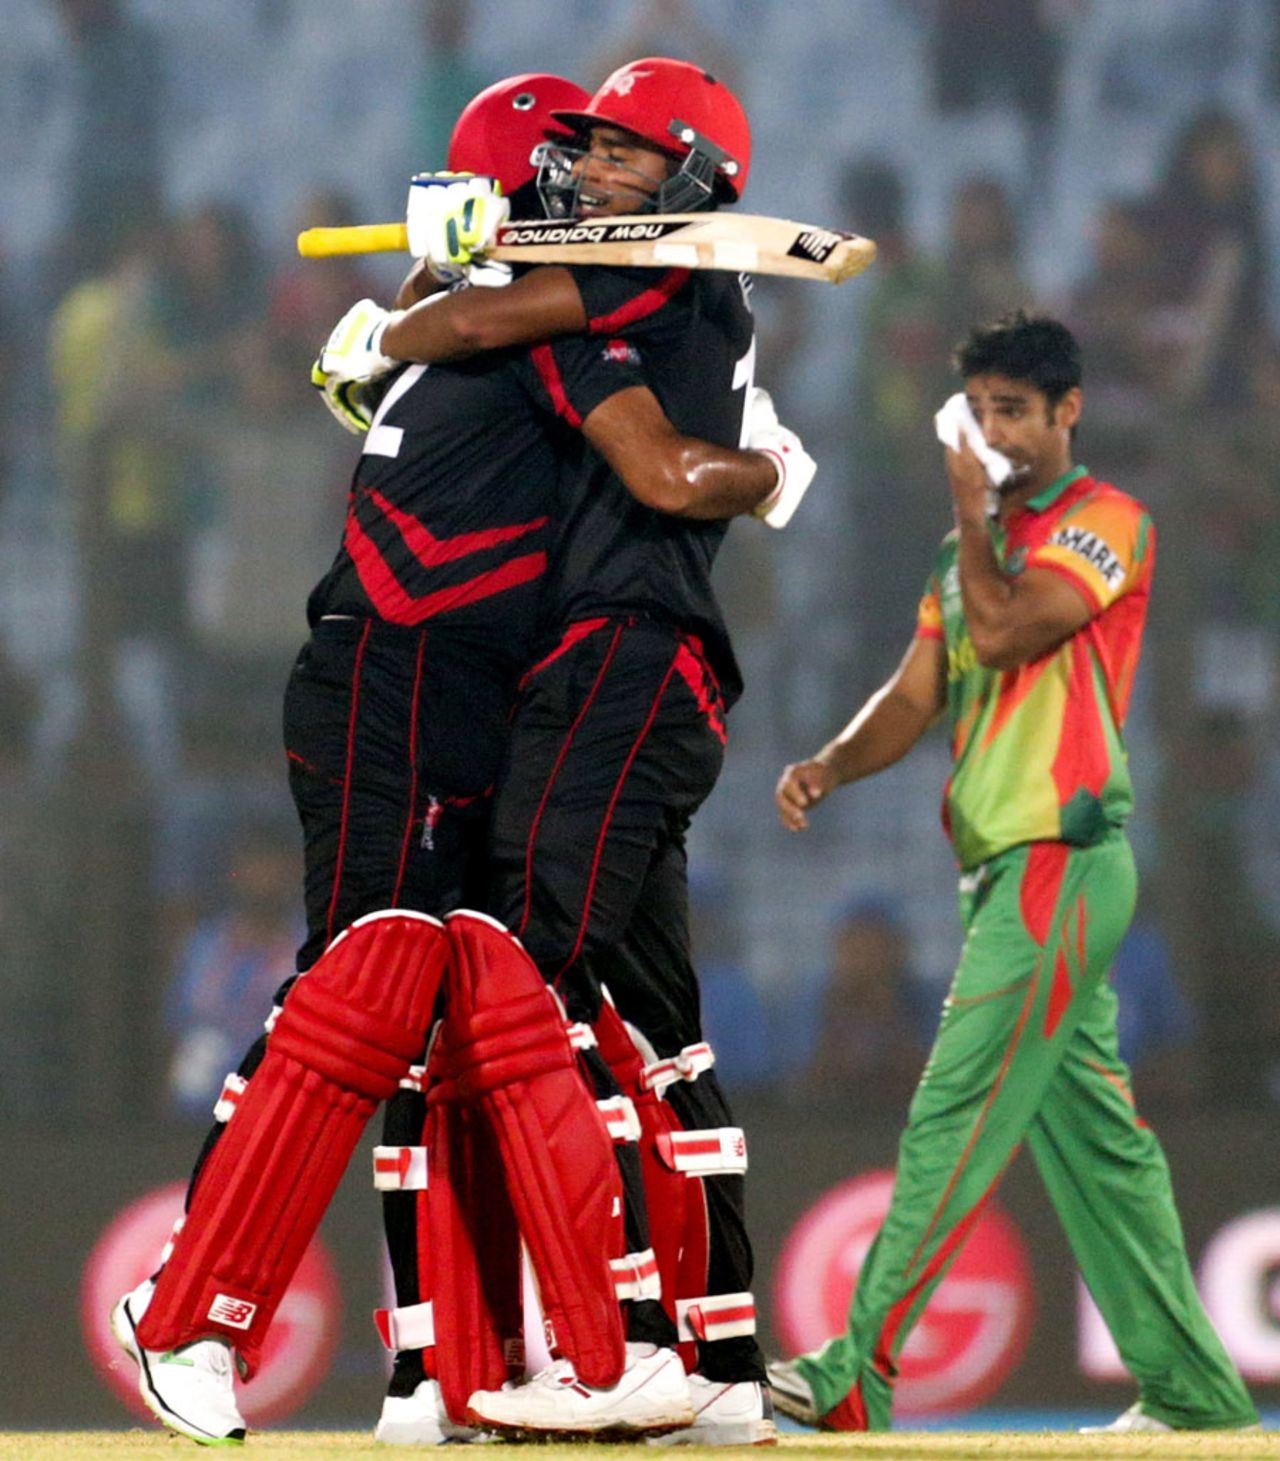 Haseeb Amjad and Nadeem Ahmed celebrate after the winning hit, Bangladesh v Hong Kong, World T20, Group A, Chittagong, March 20, 2014